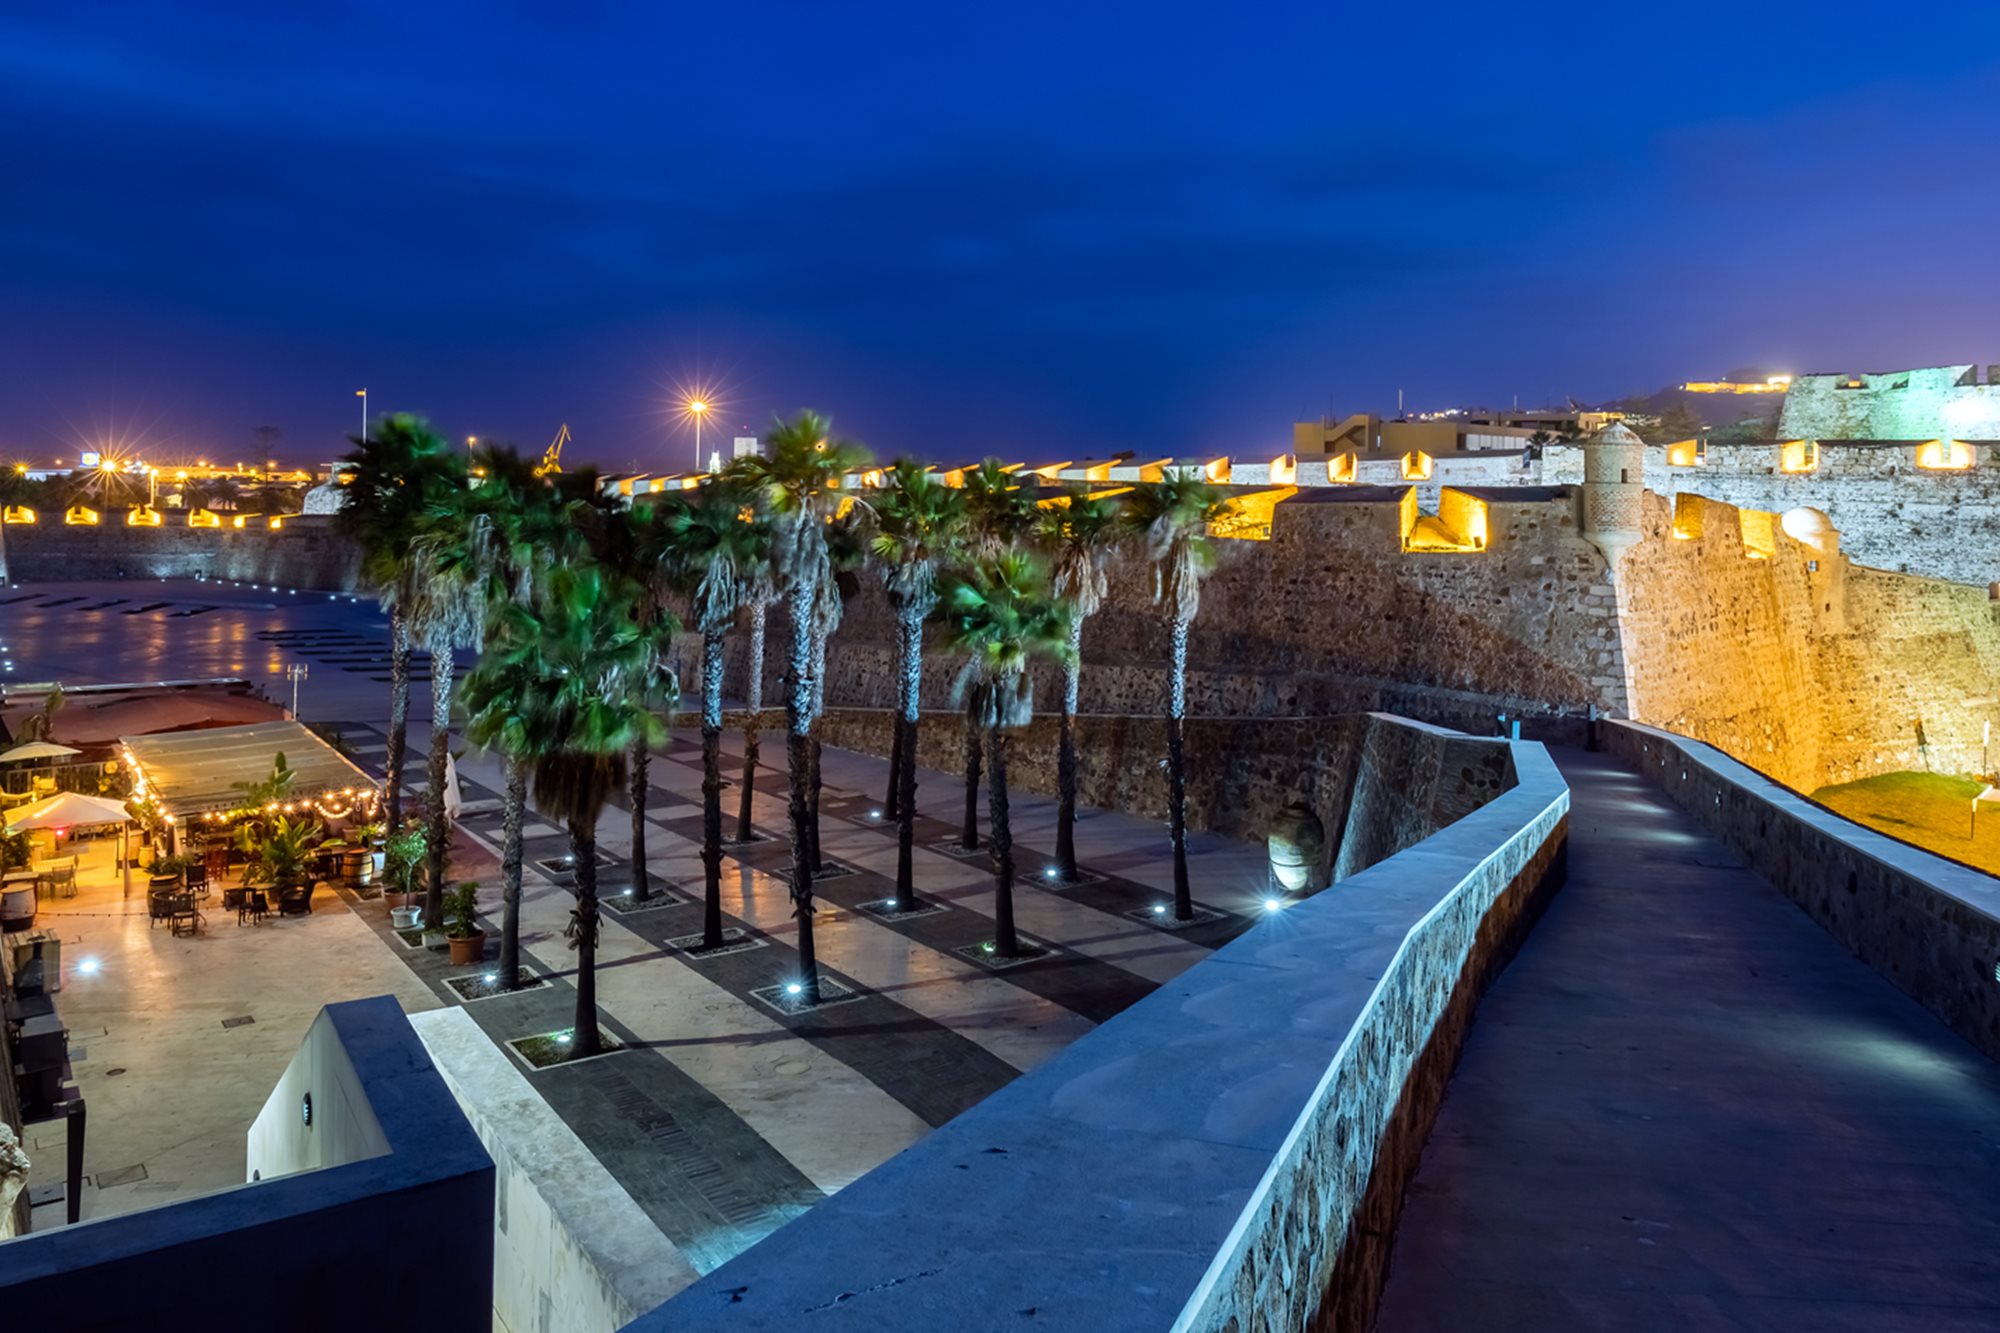 Ceuta Royal Fortress